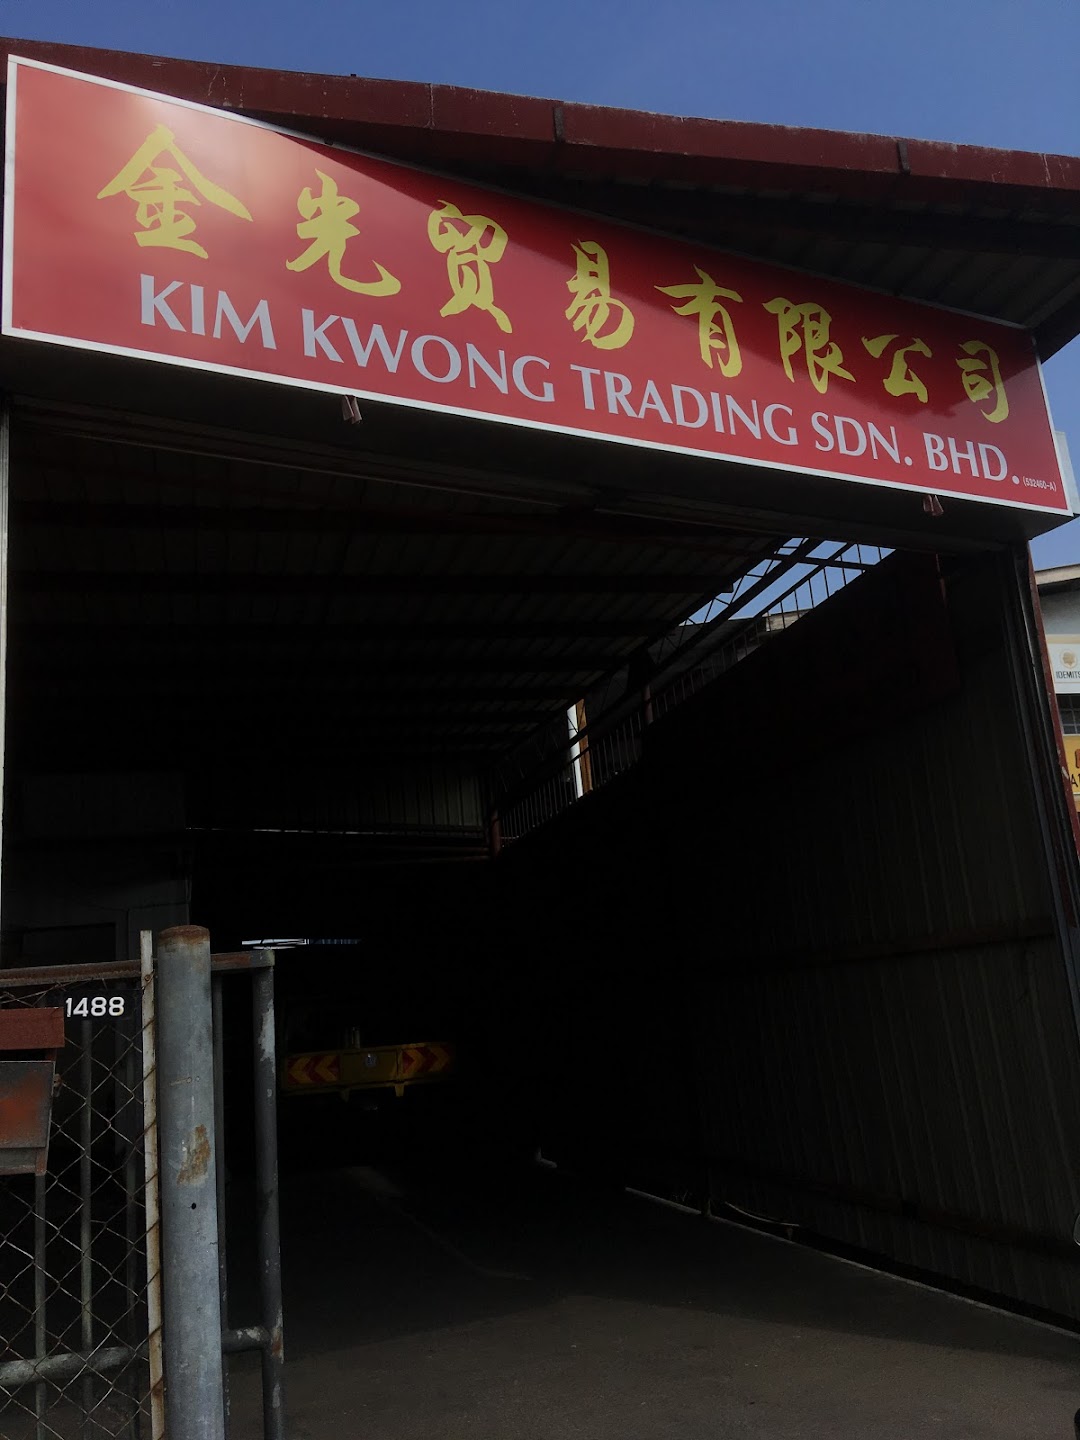 Kim Kwong Trading SDN BHD